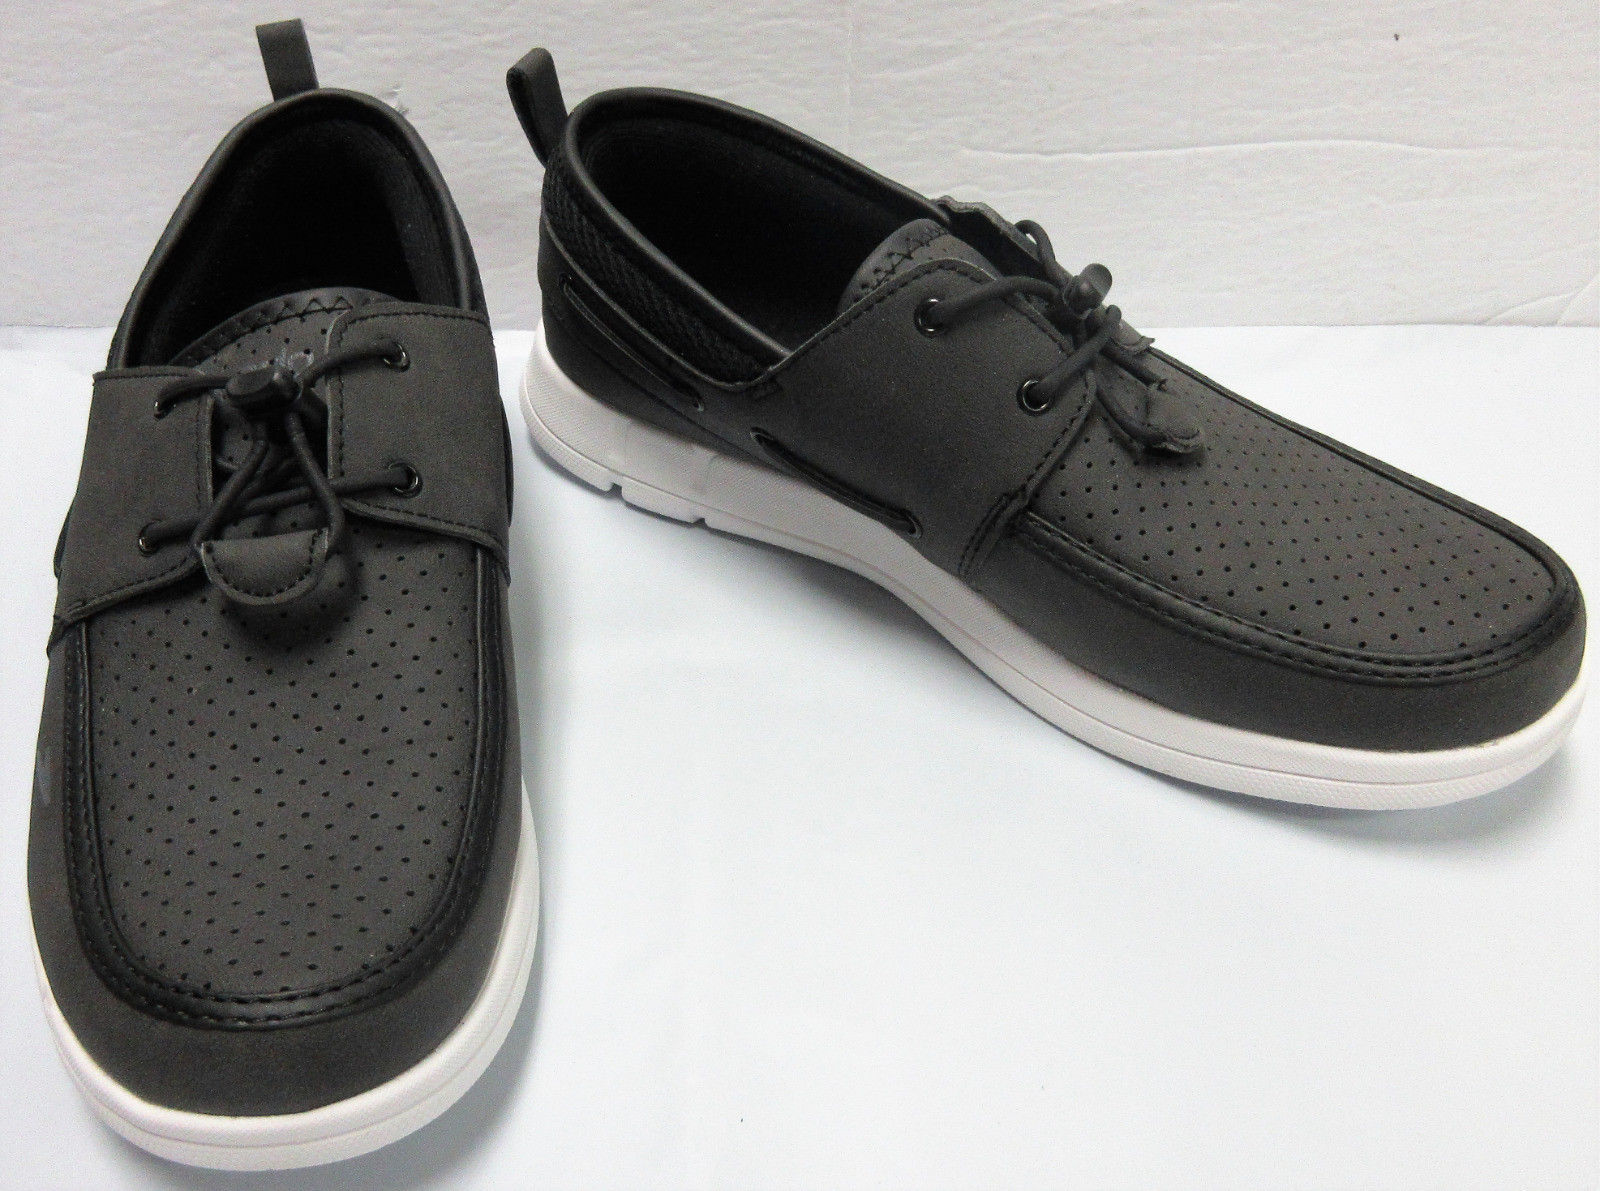 Speedo Men's Water Port Boat Dock Shoes - Size 9 - Black - Athletic